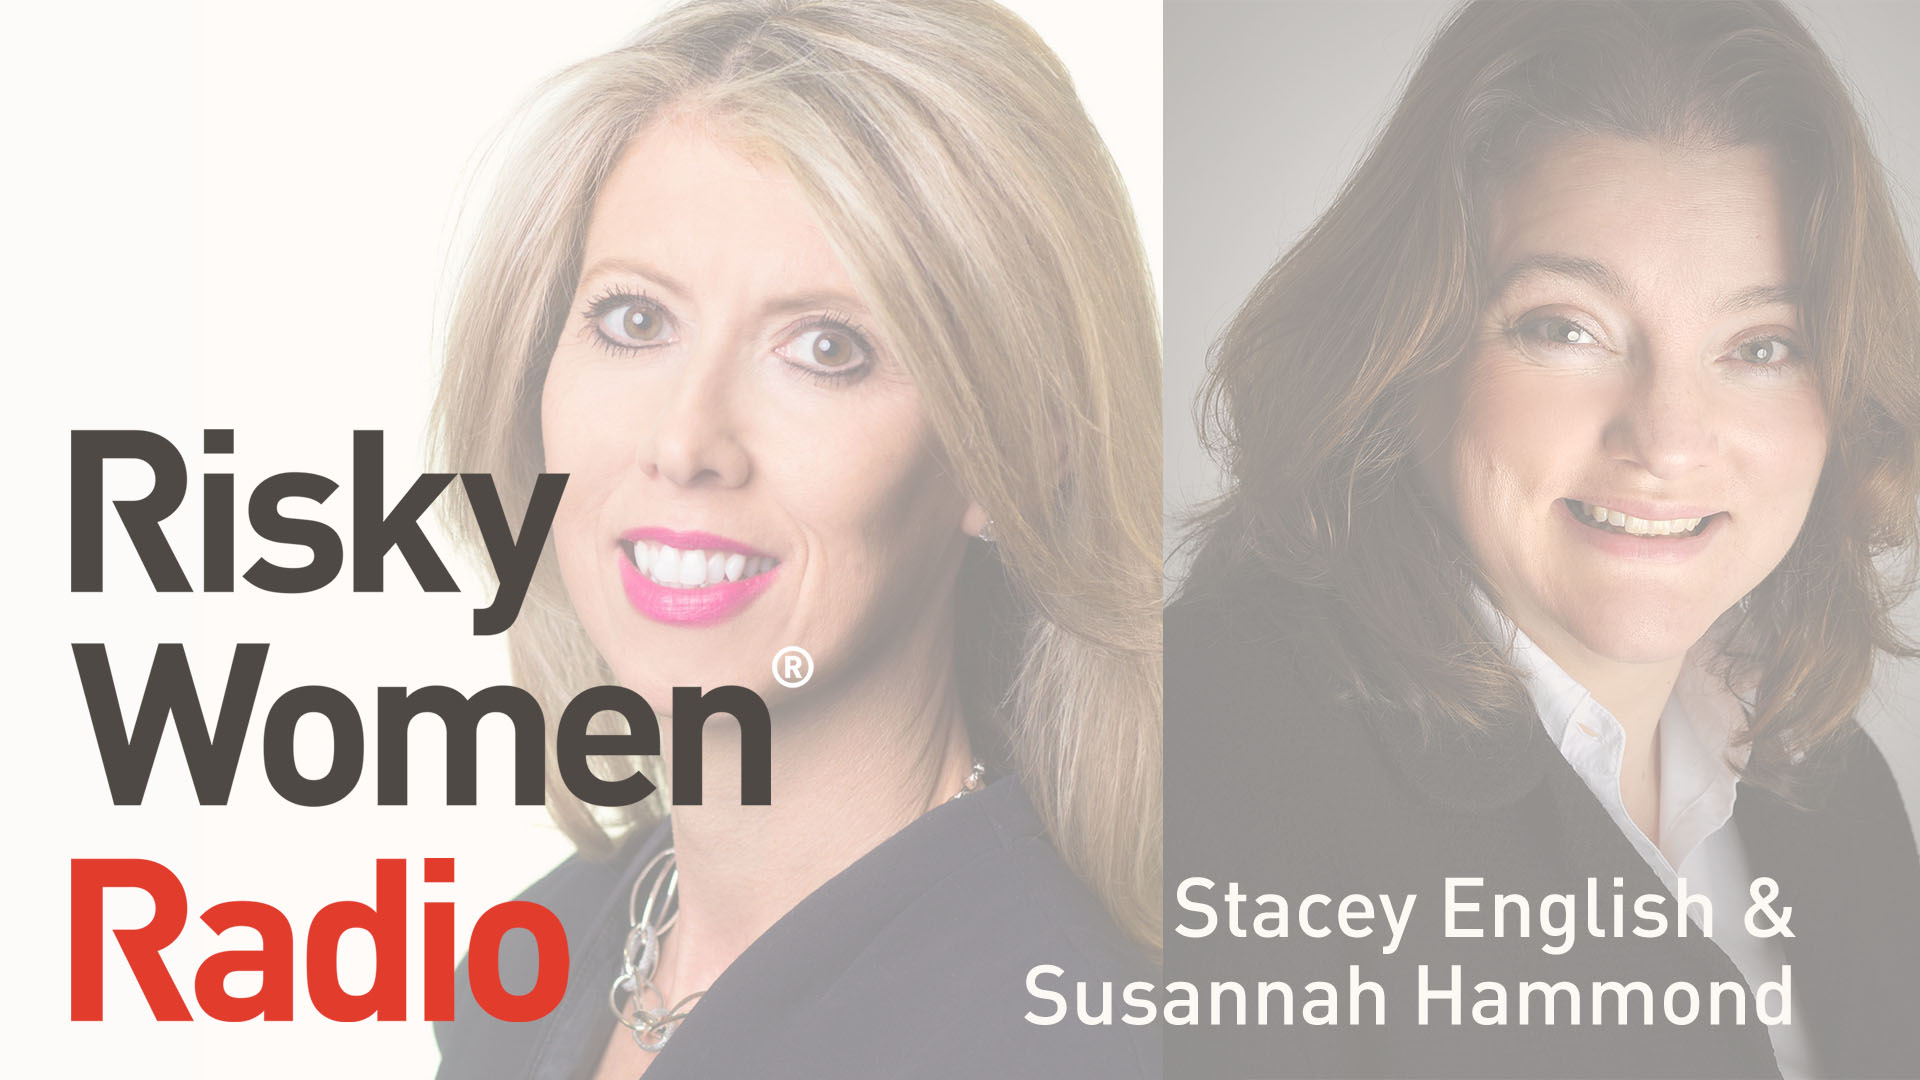 Risky Women Radio Podcast Cover Hammond